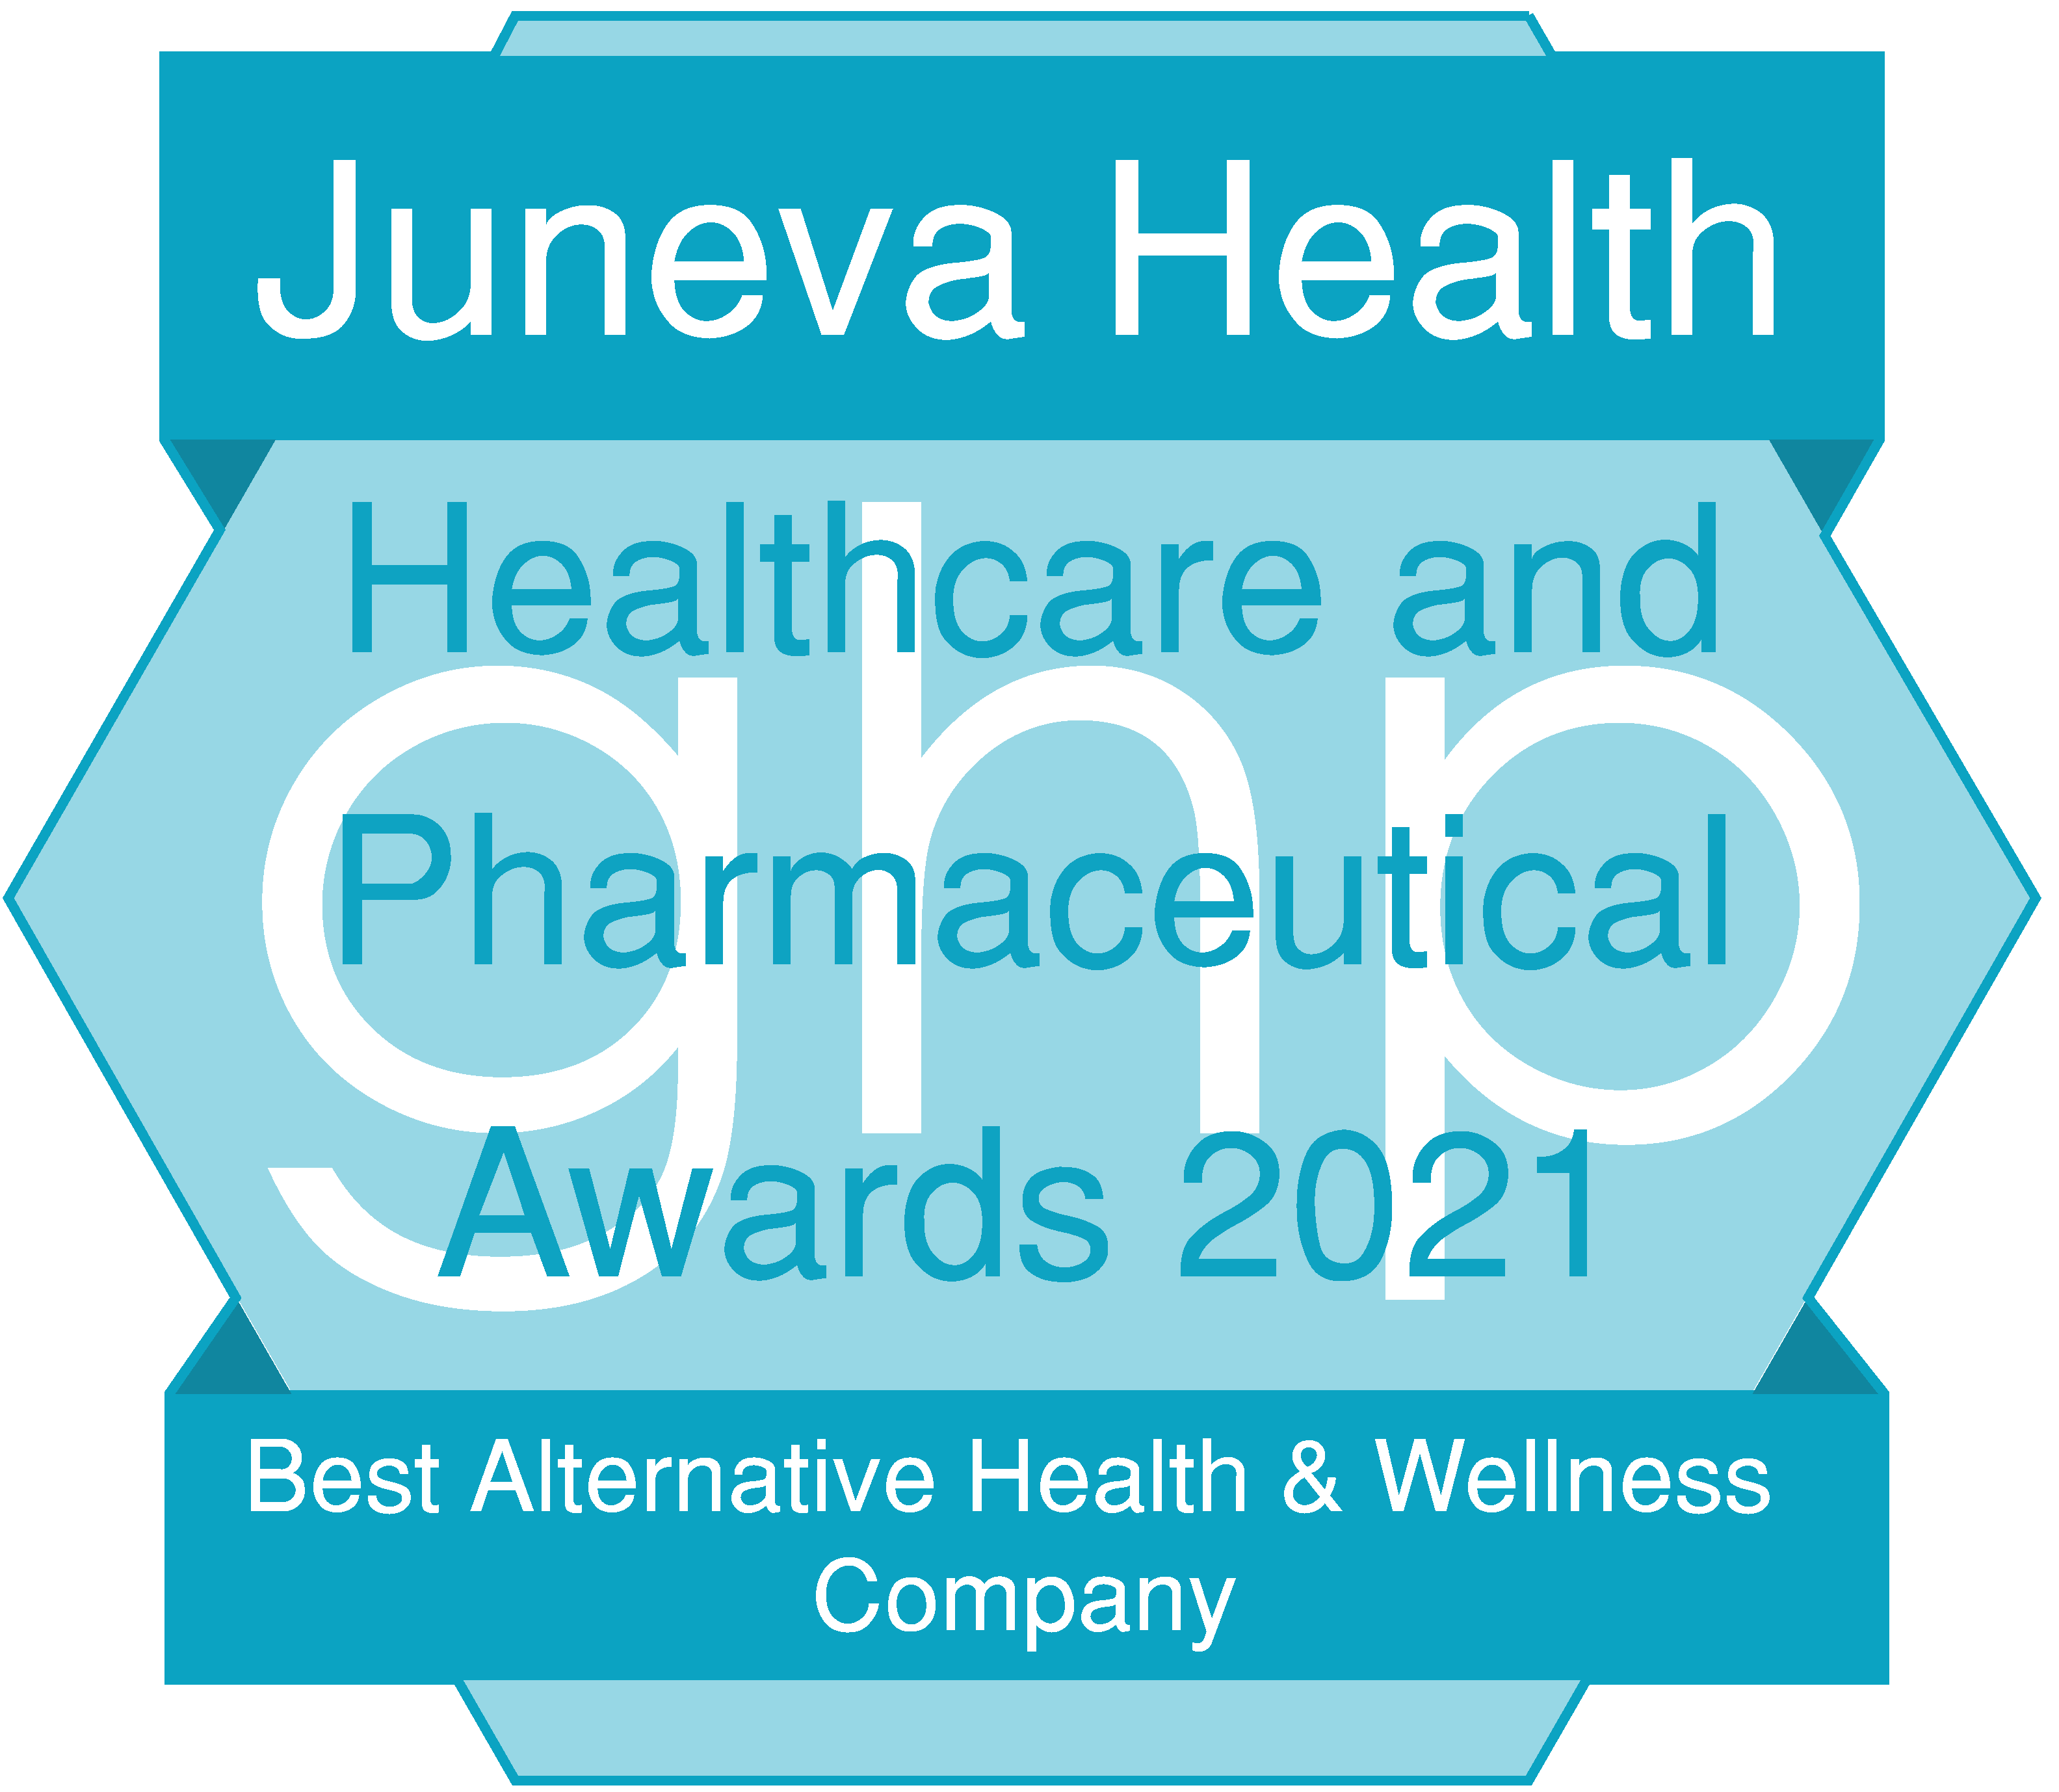 Juneva Health Best Bioenergetic Health Company 2021